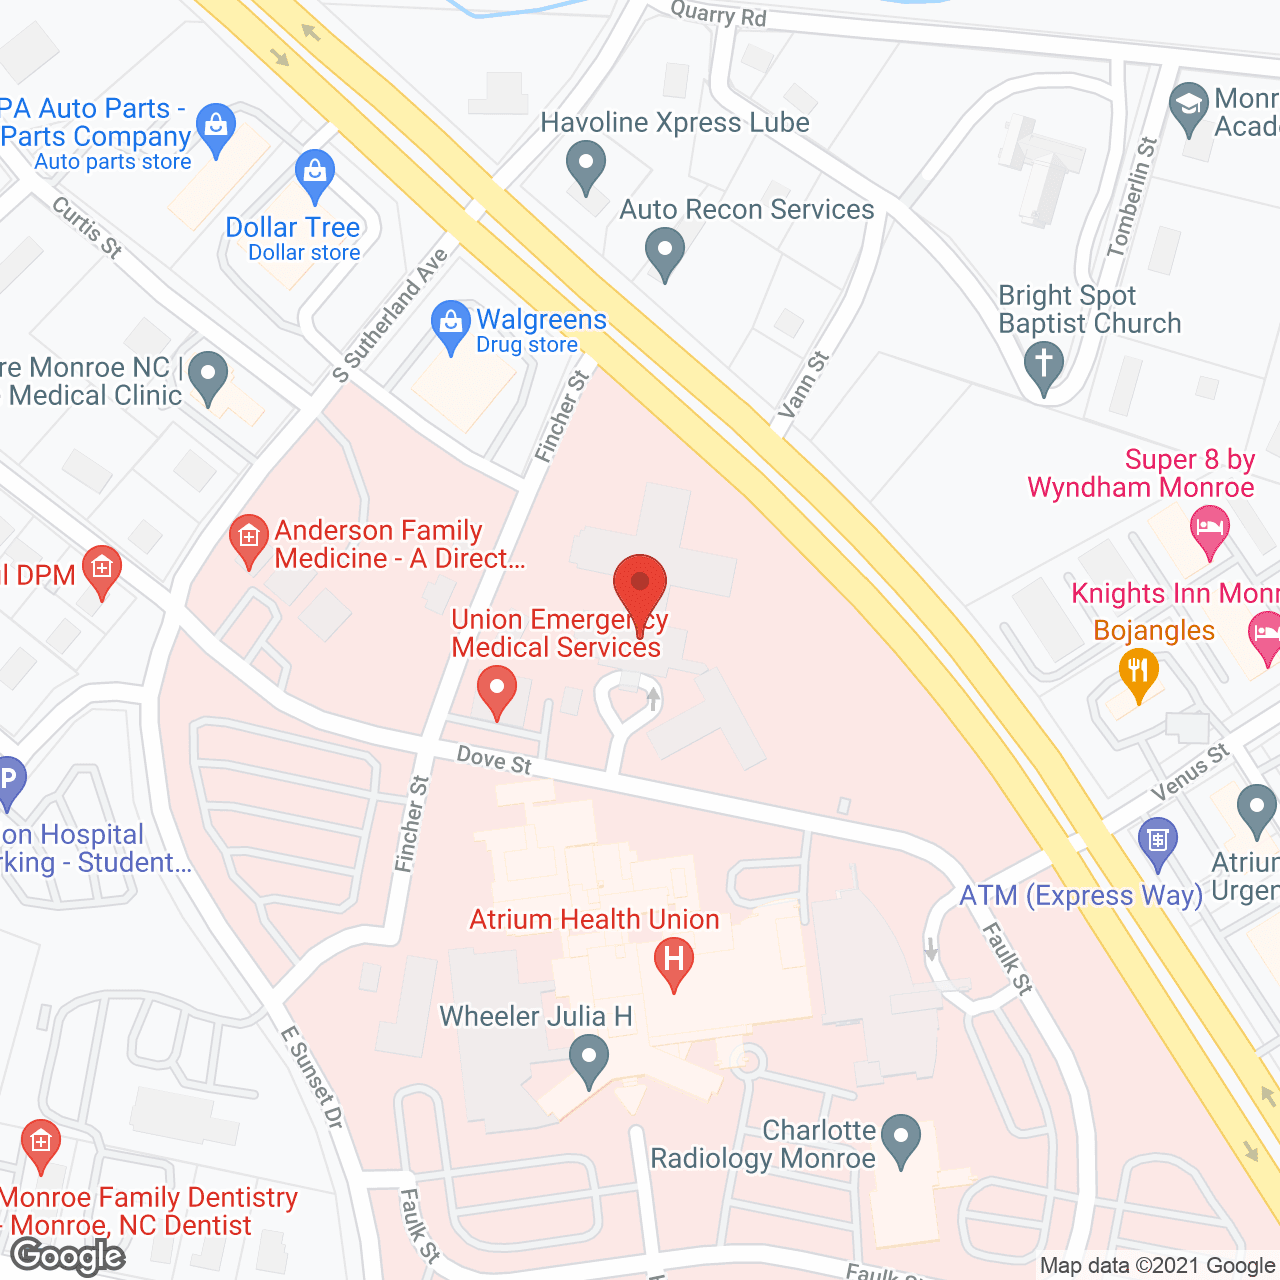 Jesse Helms Nursing Center in google map